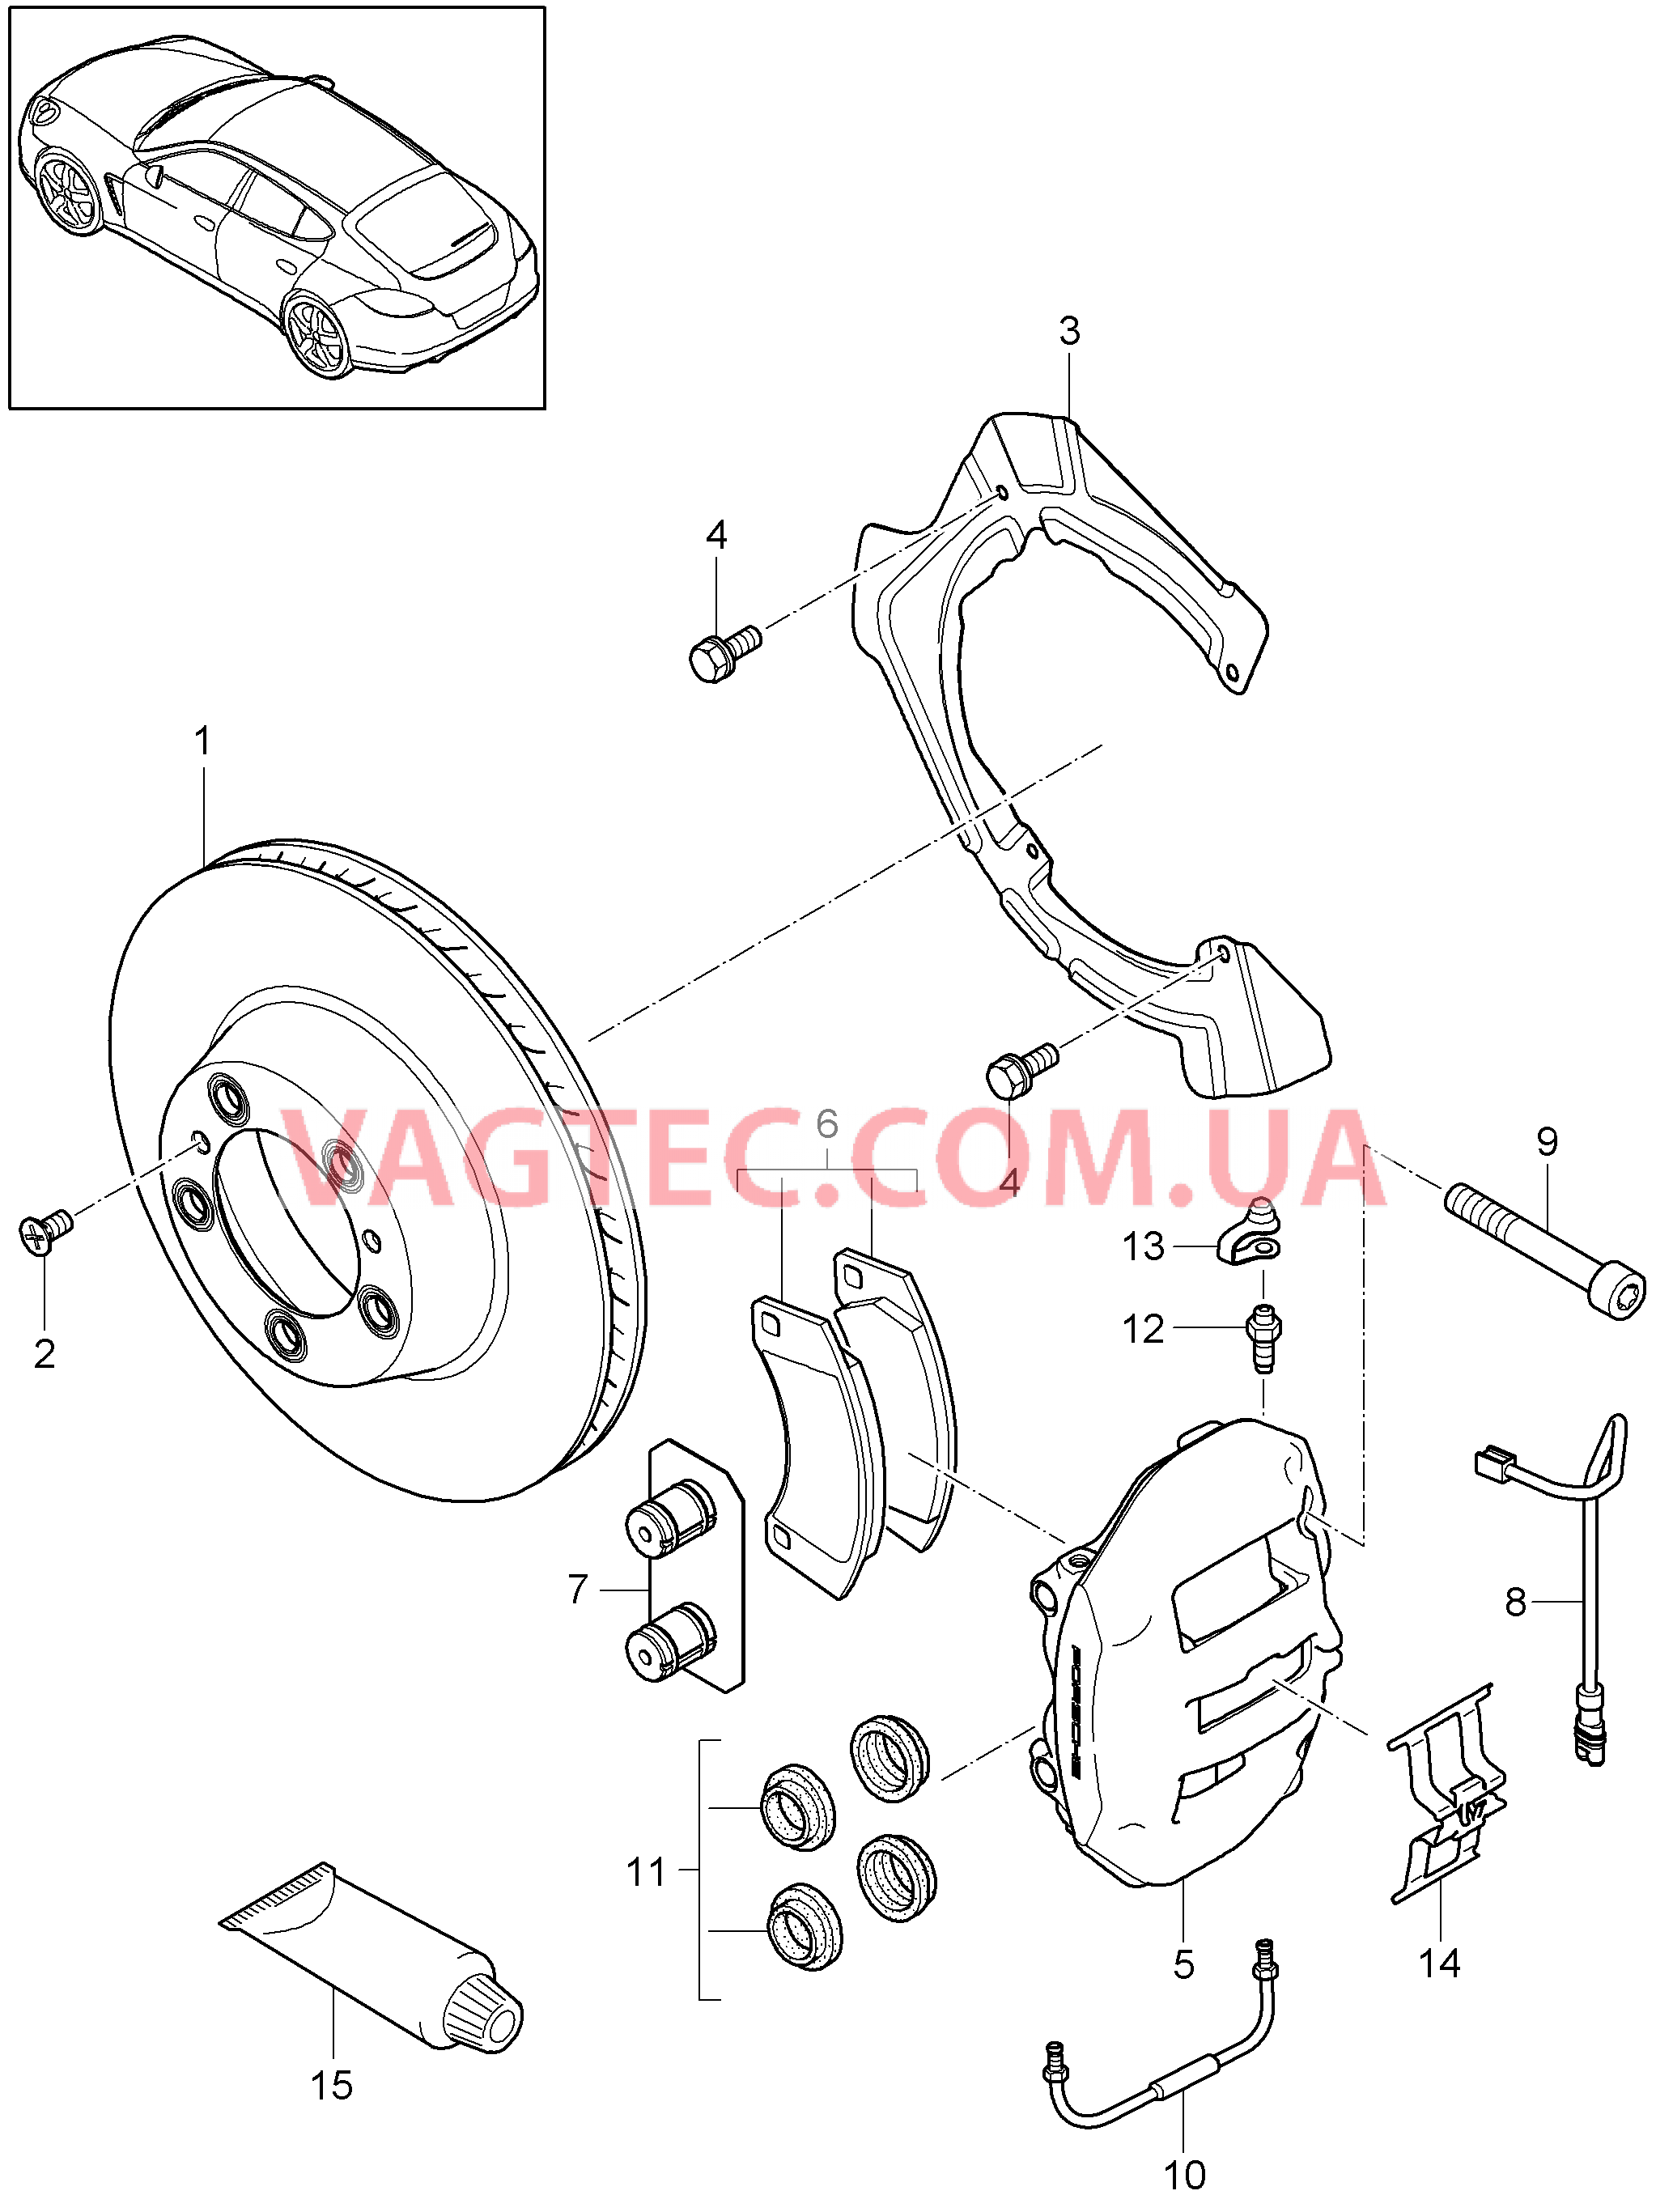 603-005 Дисковой тормоз, Задняя ось
						
						TURBO, M48.70, TURBO S для PORSCHE Panamera 2010-2016